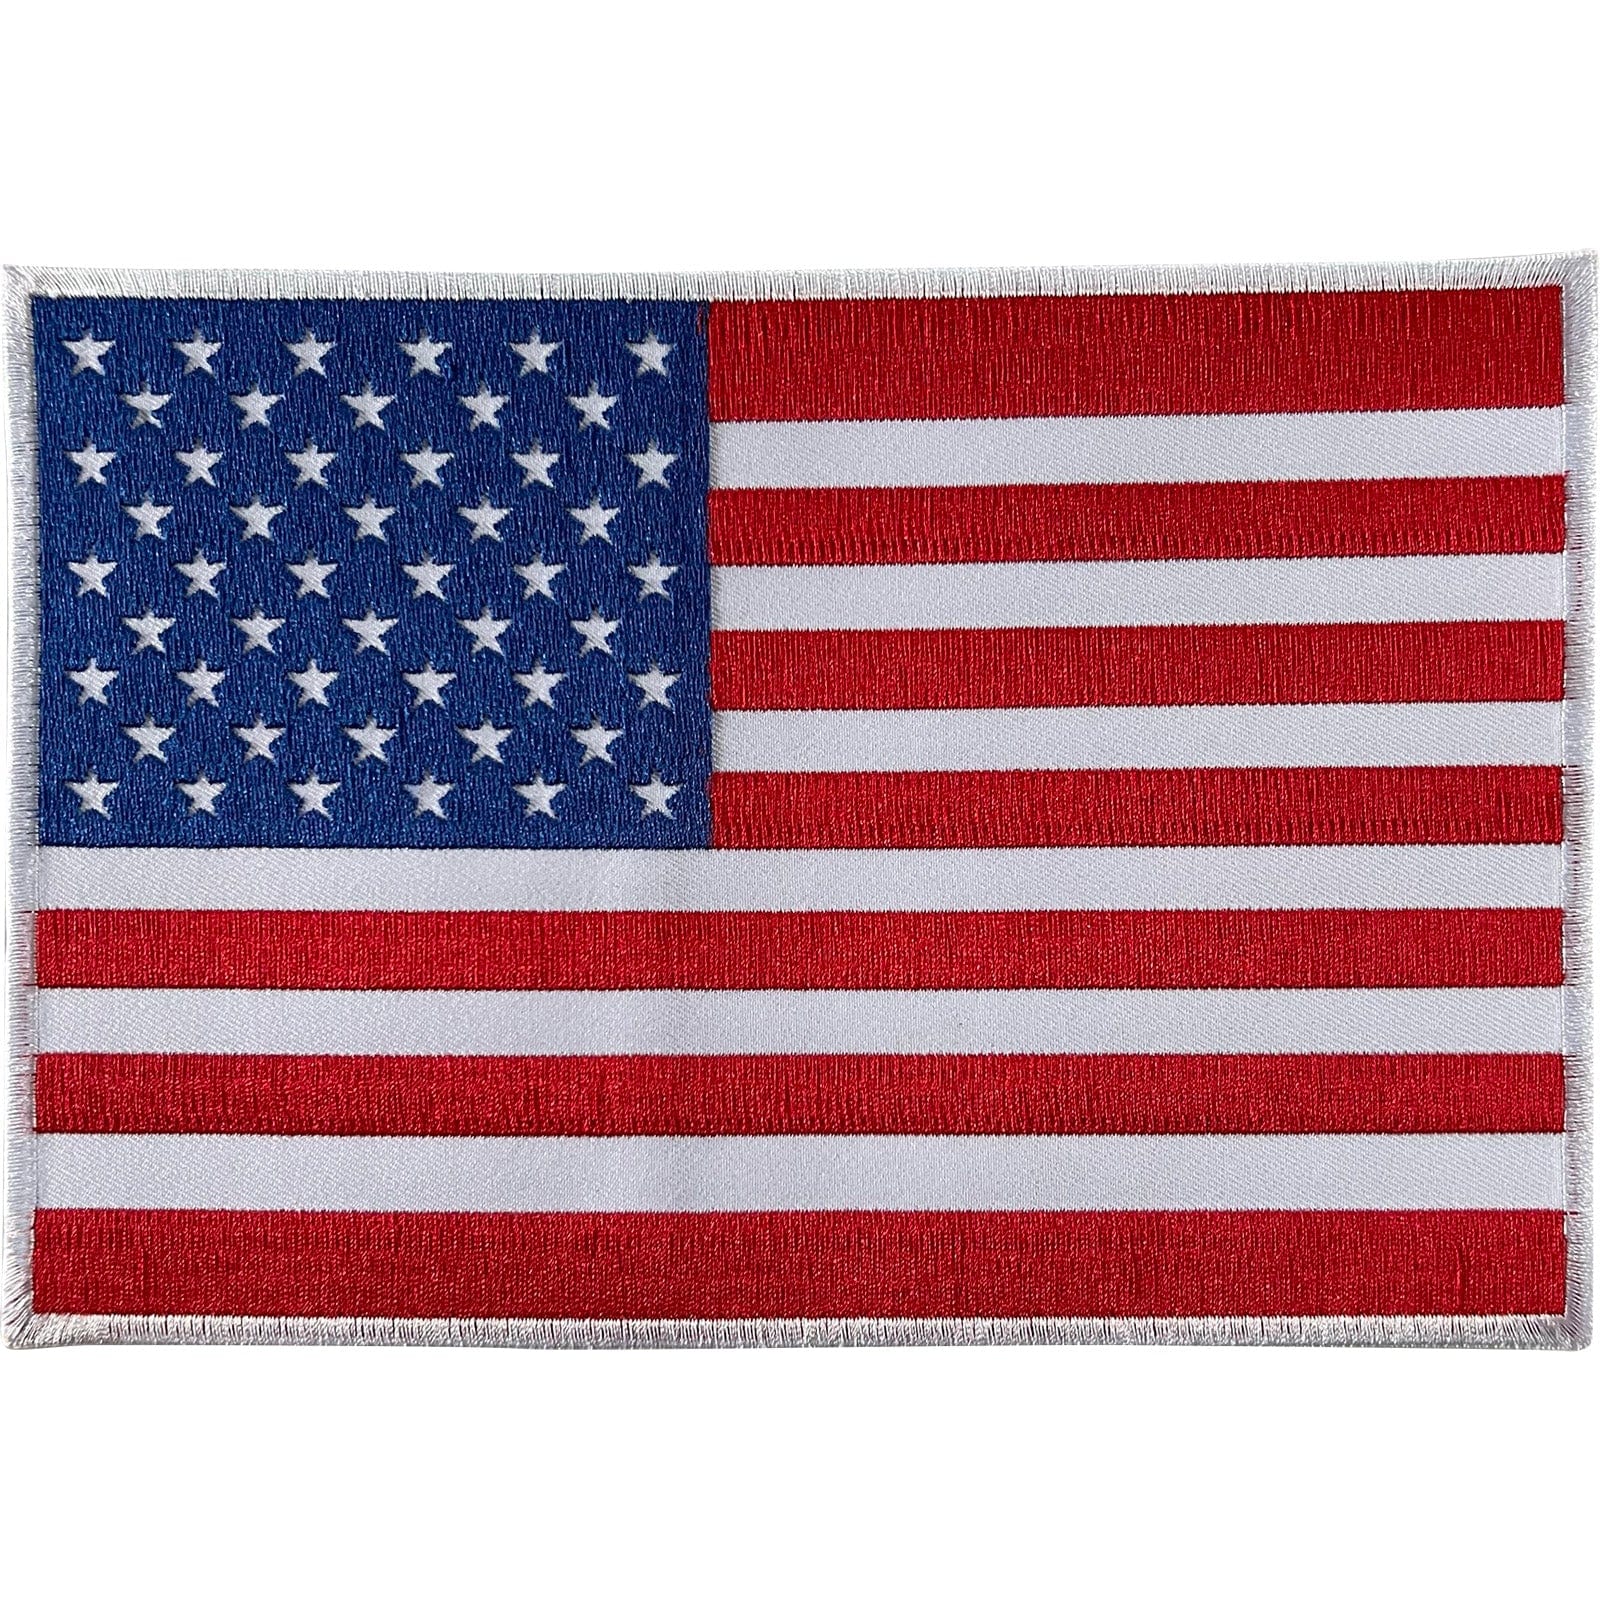 Big Large USA Flag Patch Iron Sew On Jacket America United States Clothes Badge